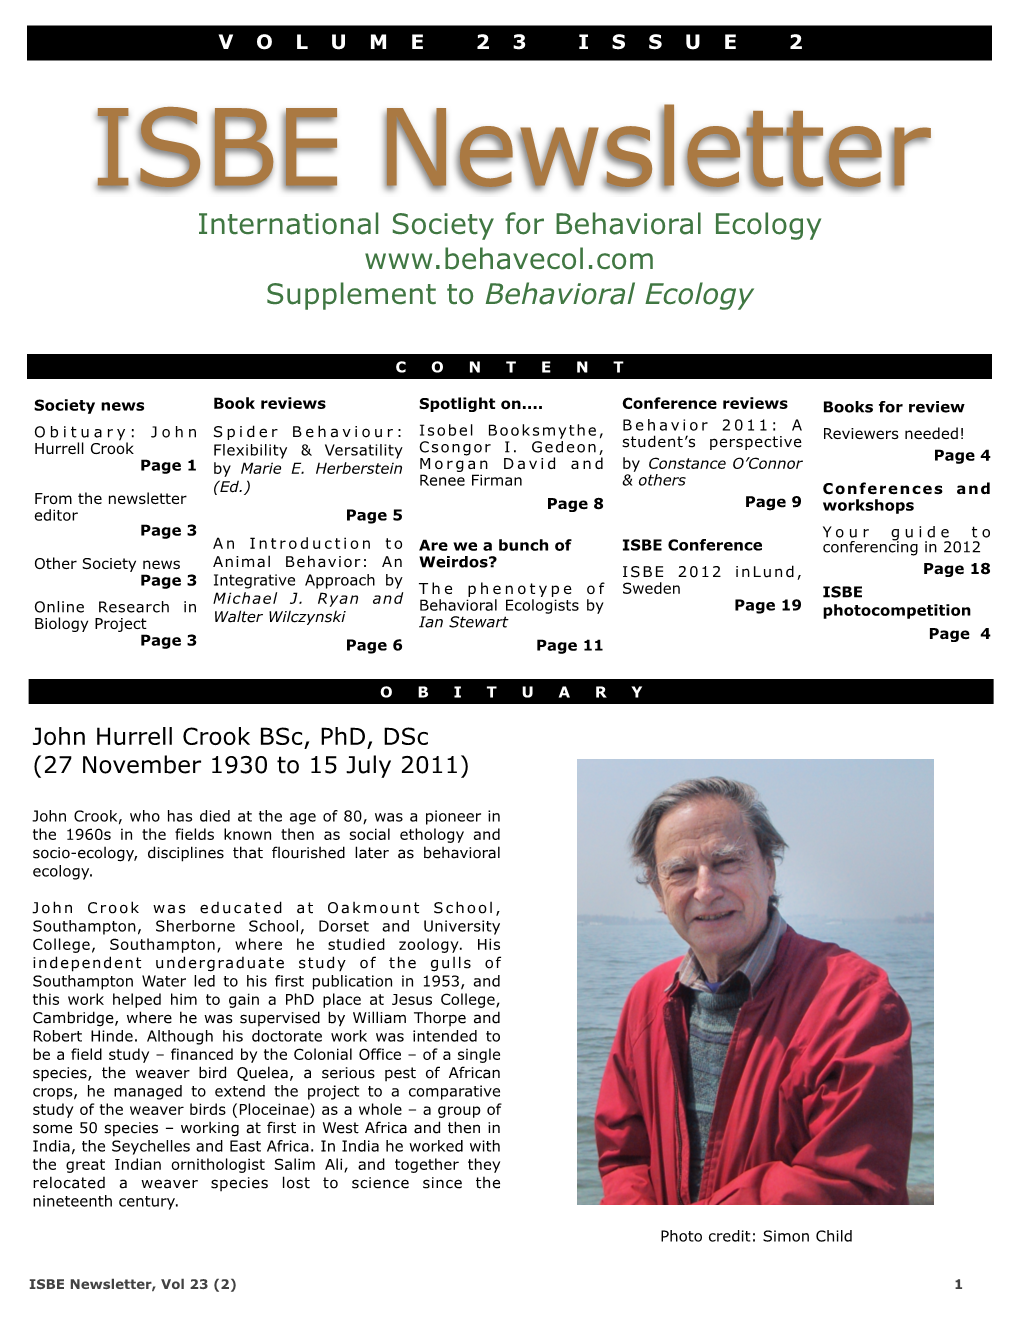 ISBE Newsletter International Society for Behavioral Ecology Supplement to Behavioral Ecology